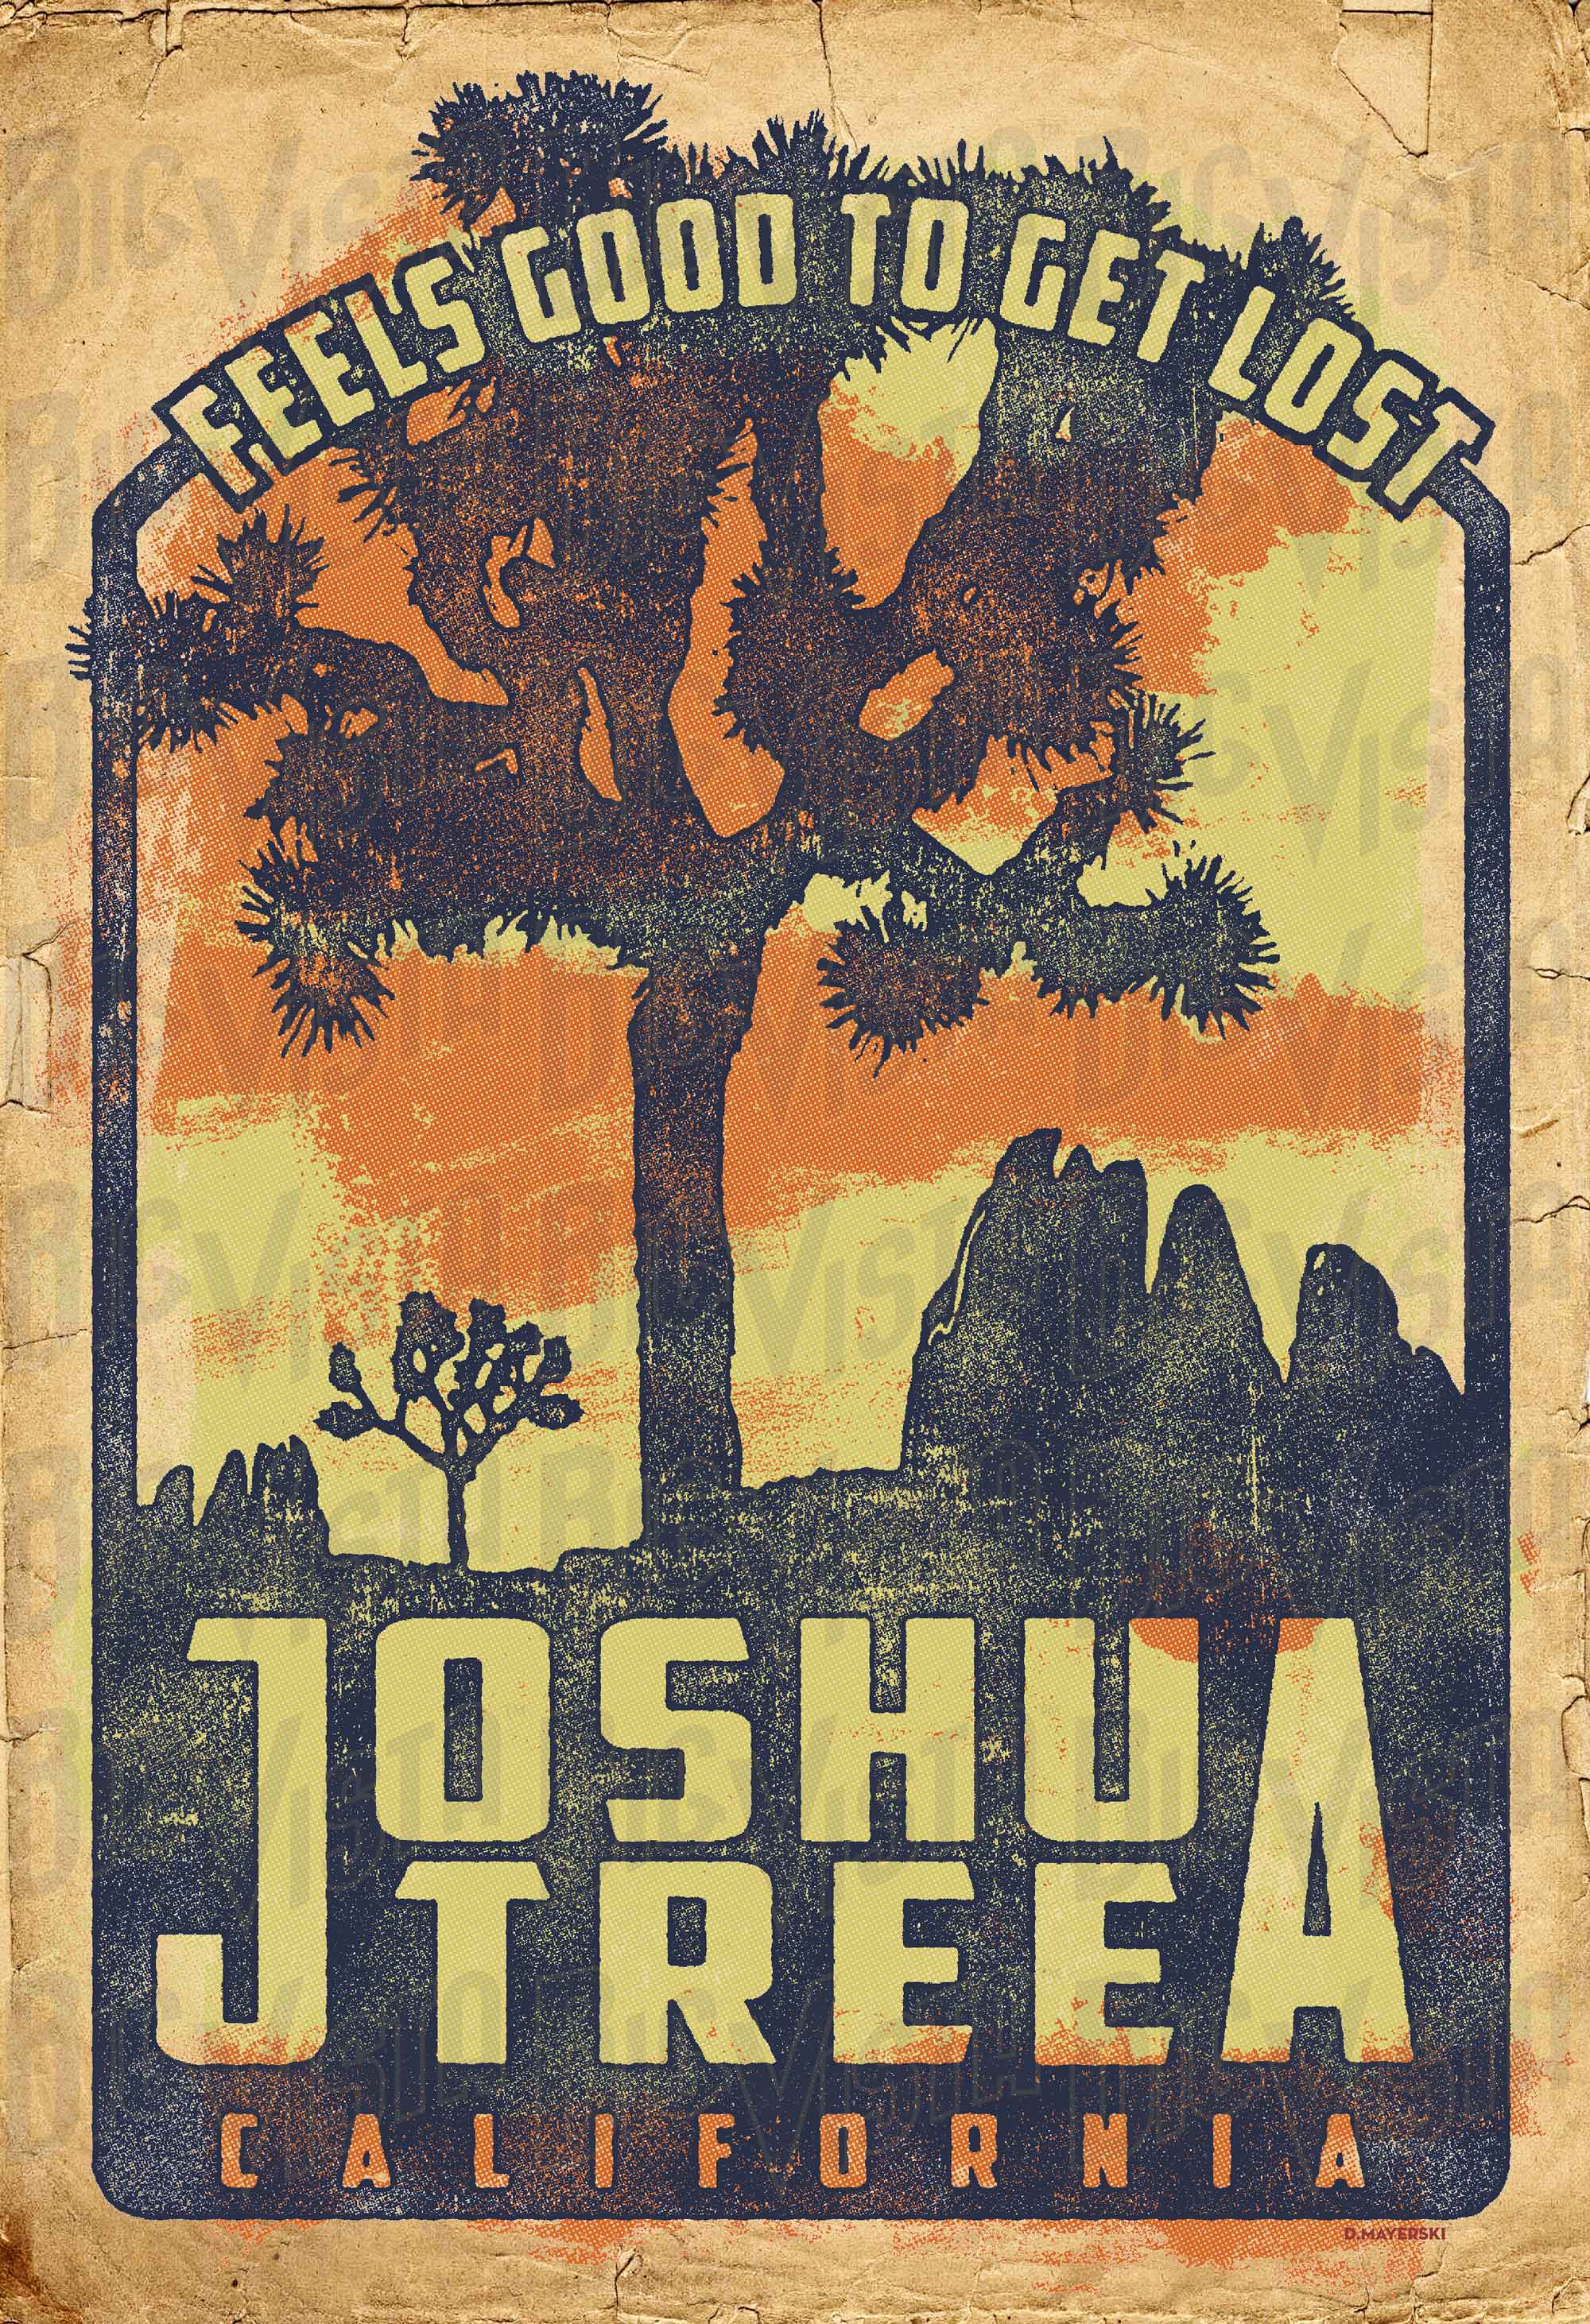 Joshua Tree Feels Good poster